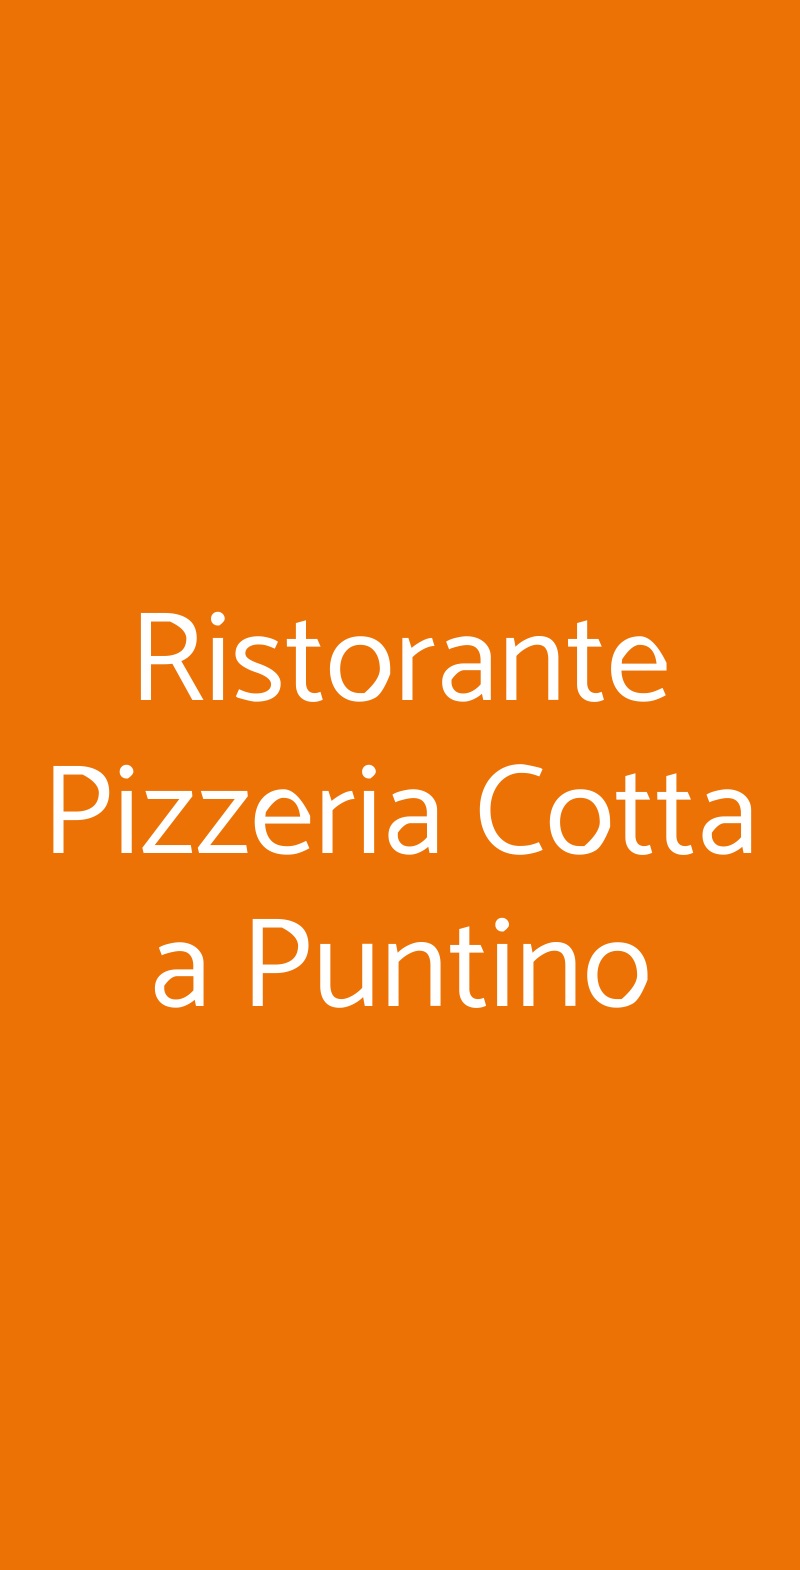 Ristorante Pizzeria Cotta a Puntino Firenze menù 1 pagina